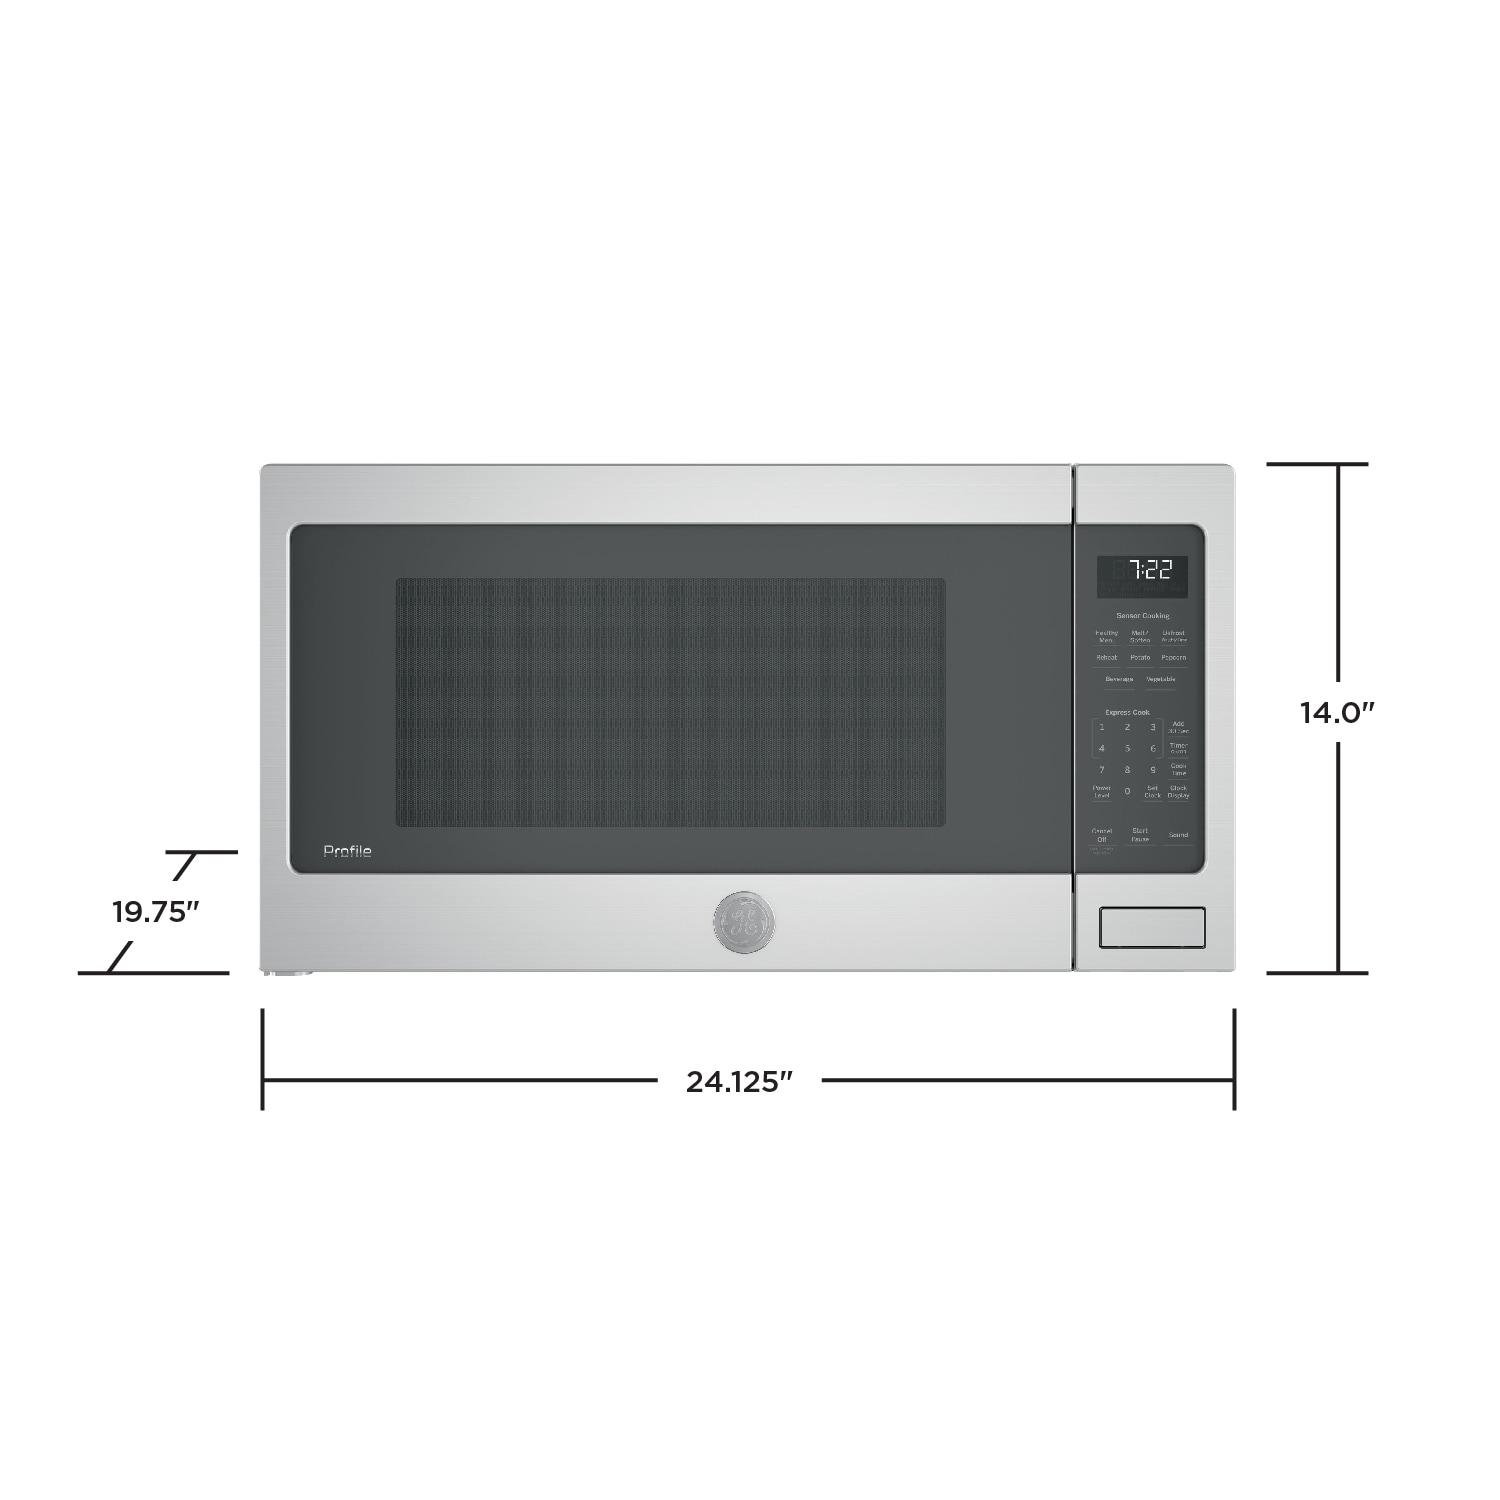 GE Profile - 2.2 Cu. Ft. Built-In Microwave - Gray 2KF for Sale in Katy